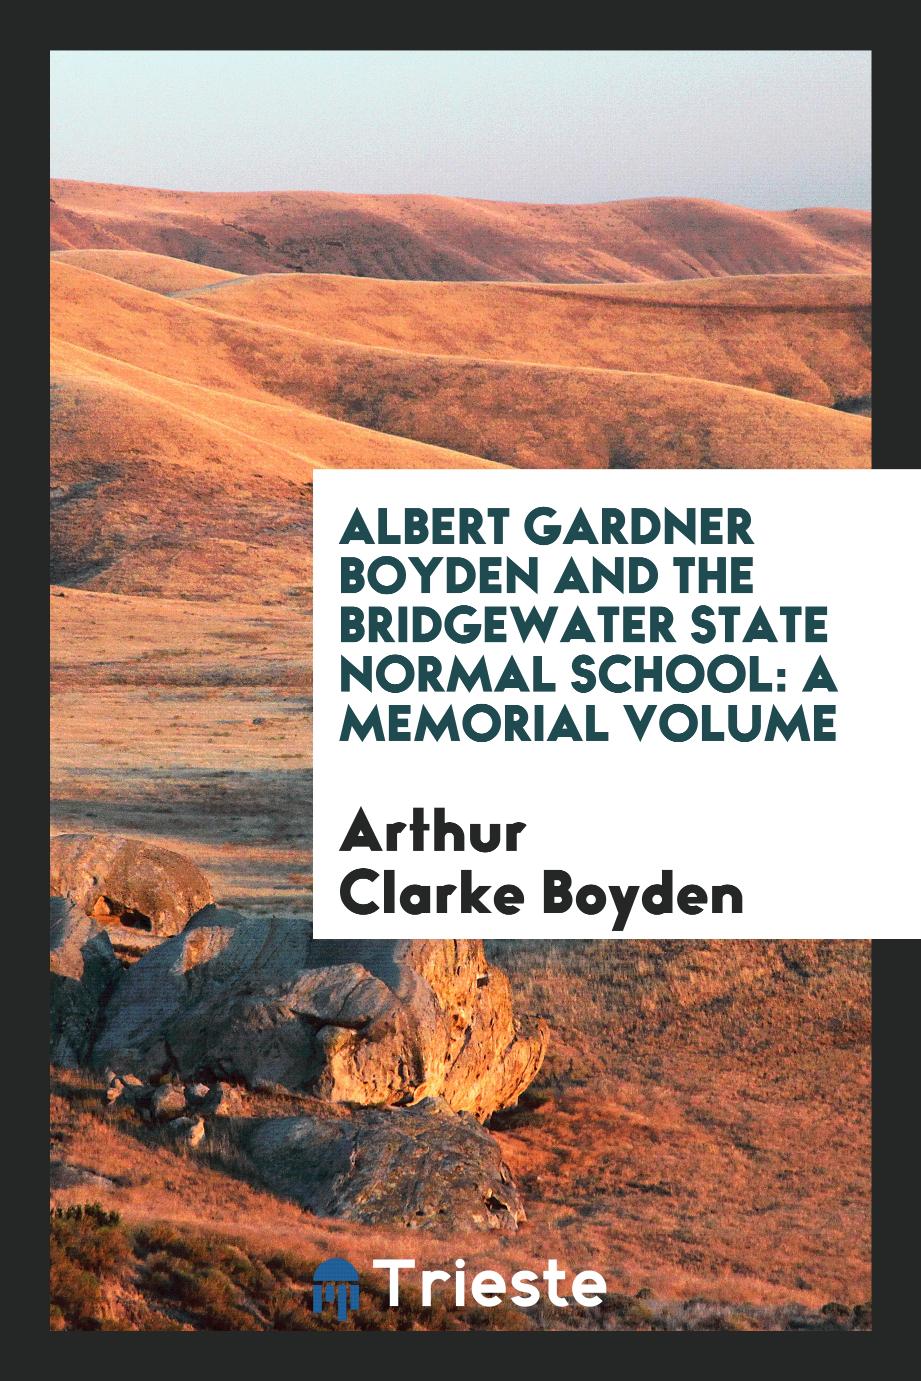 Arthur Clarke Boyden - Albert Gardner Boyden and the Bridgewater State Normal School: A Memorial Volume